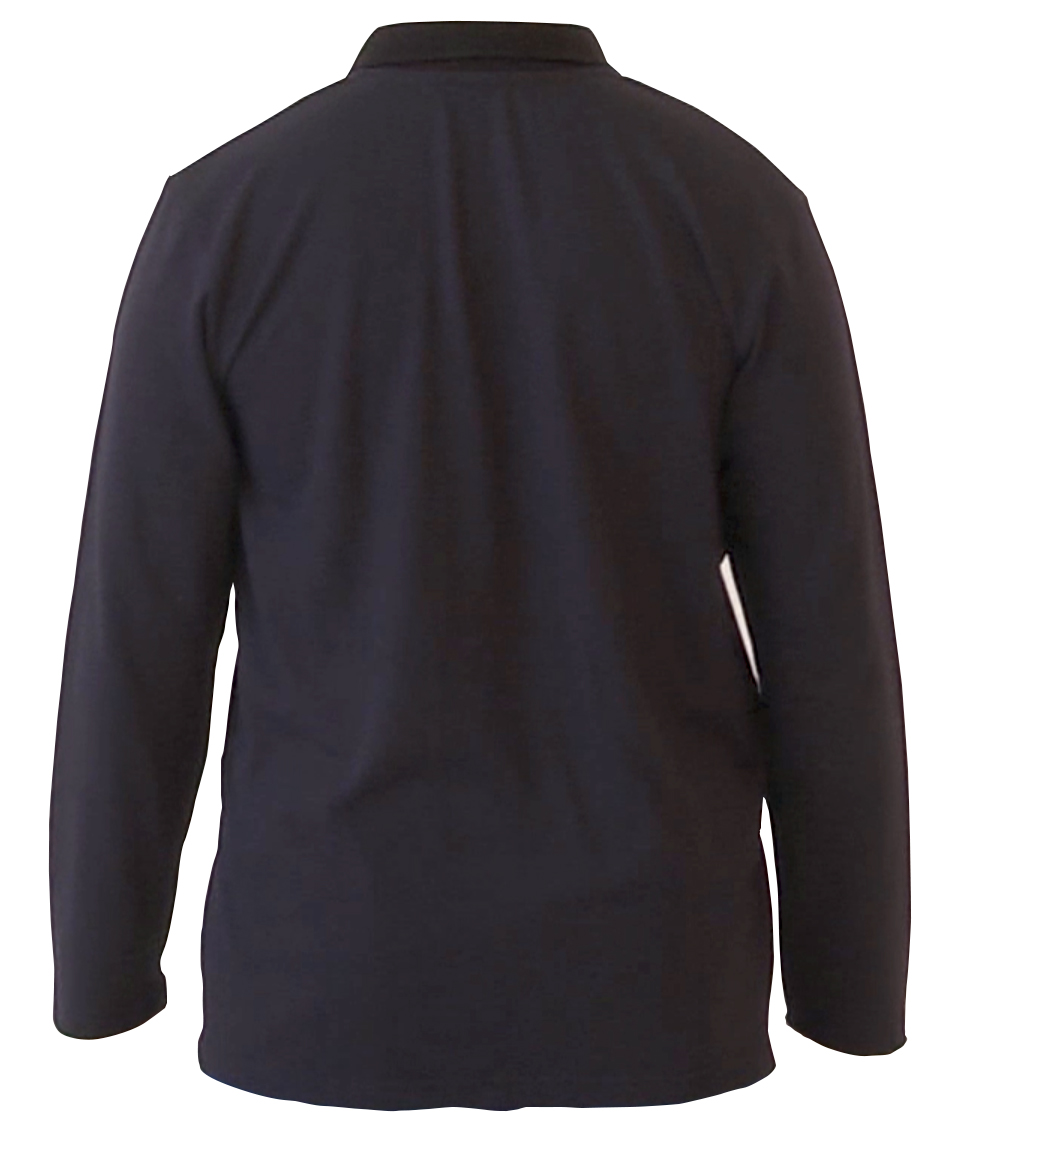 ESD Polo-Shirt Back AQGZ Style Black Unisex XL Antistatic Clothing ESD Garment - 473.AQGZ-APS21-BKXL